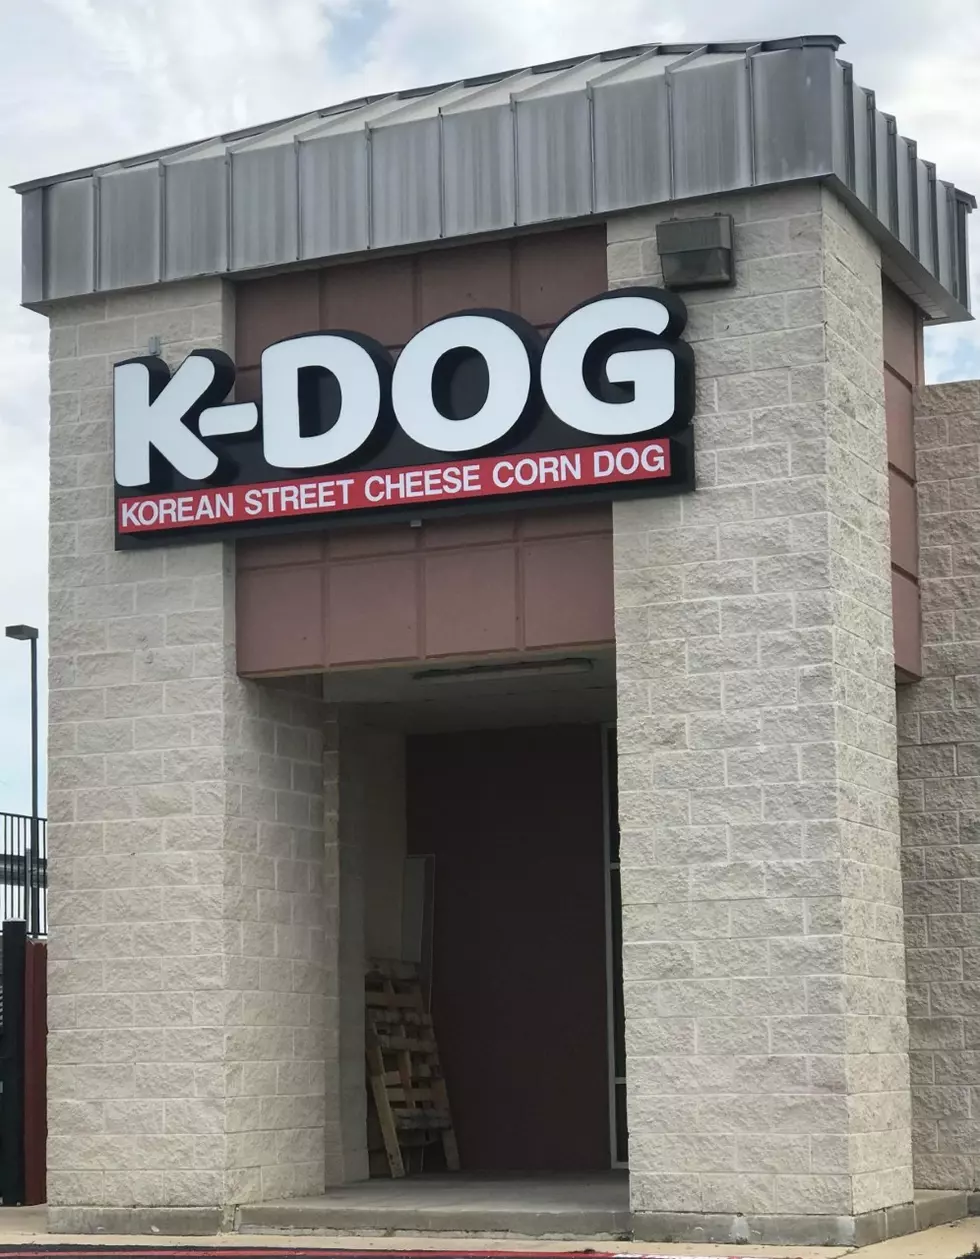 Yummy New Korean Street Food Restaurant Coming to Killeen, Texas